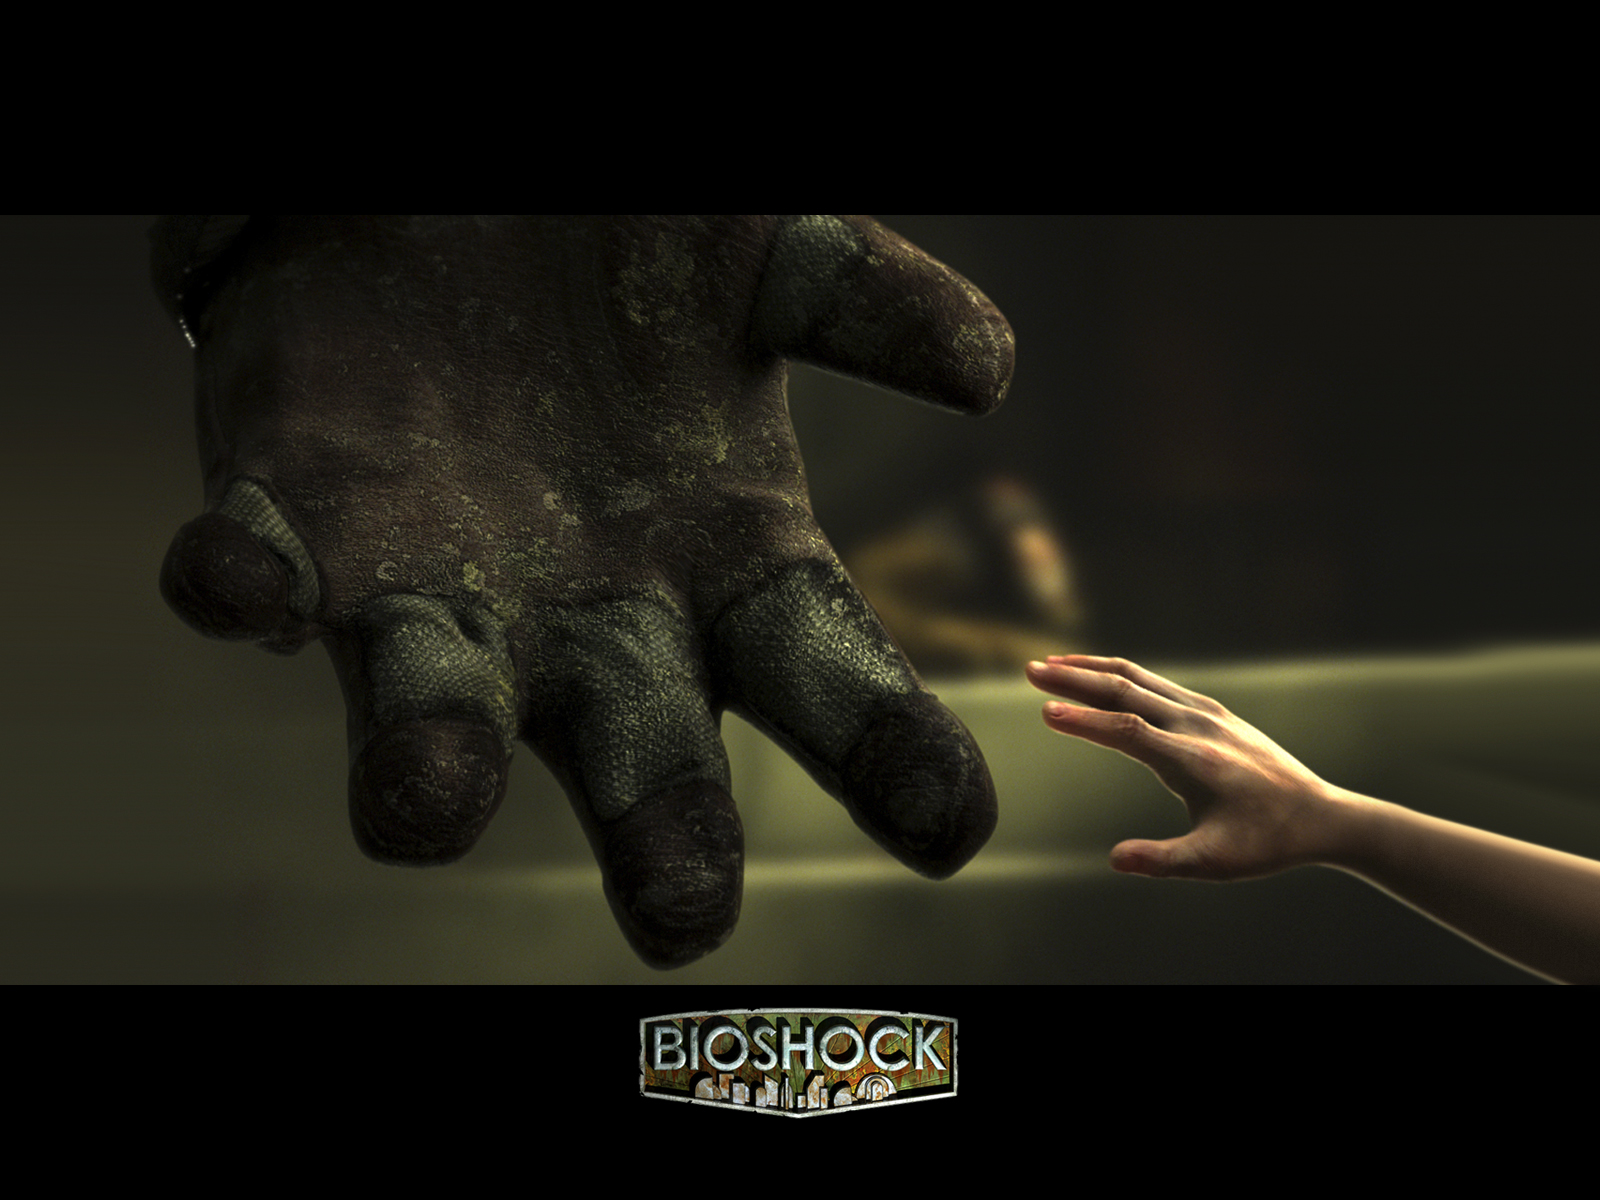 Download High quality Bioshock wallpaper / Games / 1600x1200